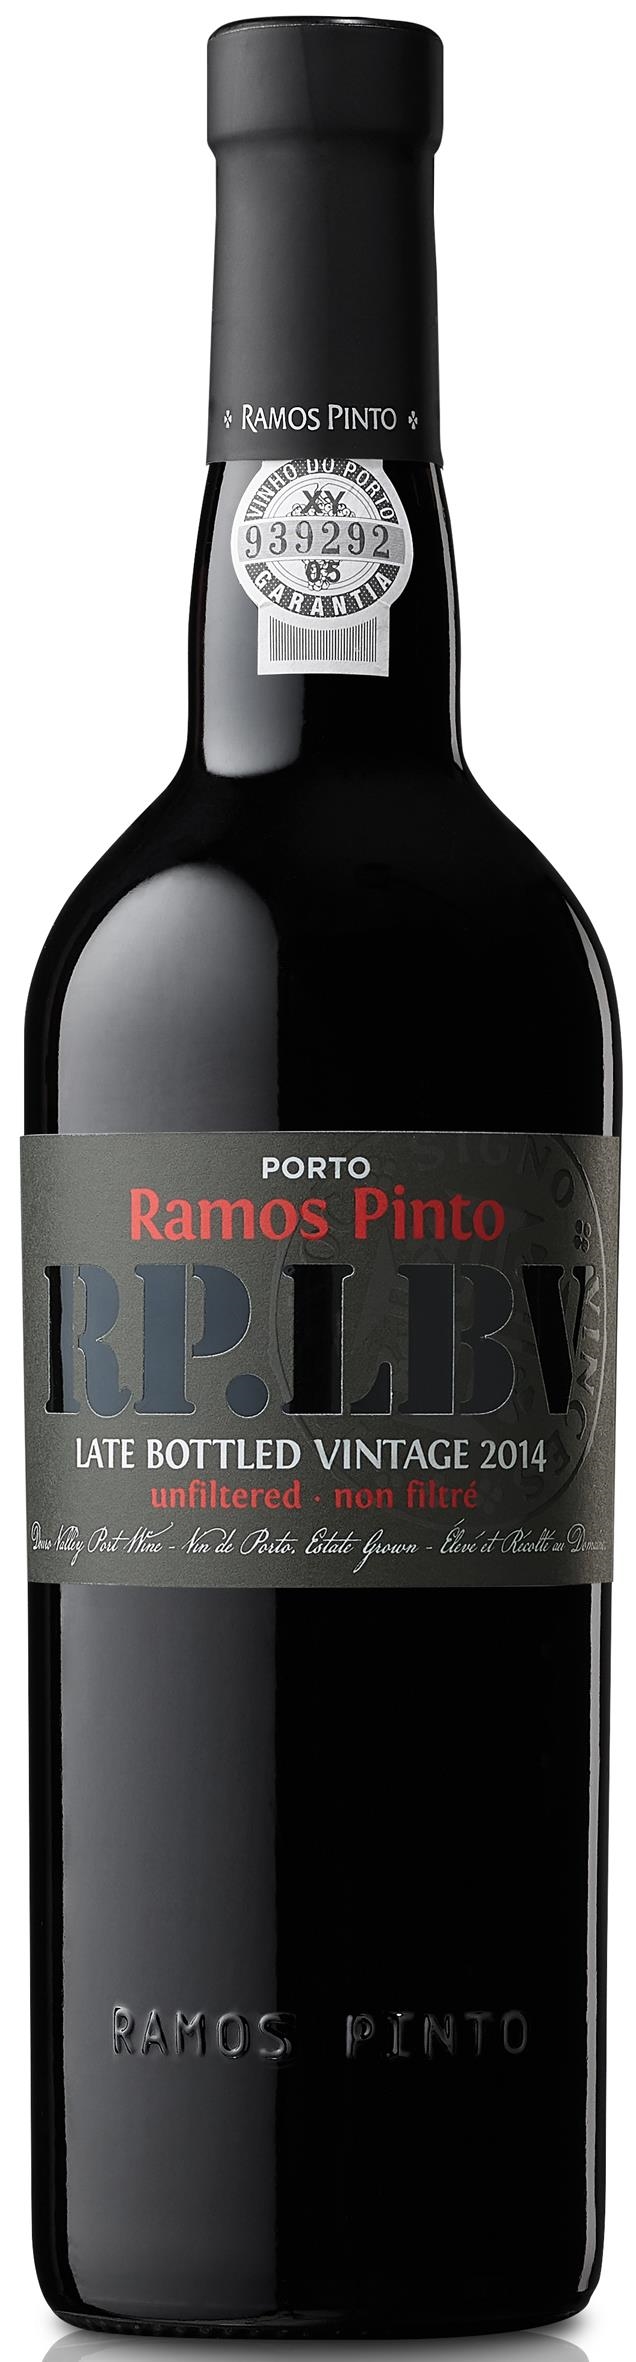 Ramos Pinto Porto LBV 2014